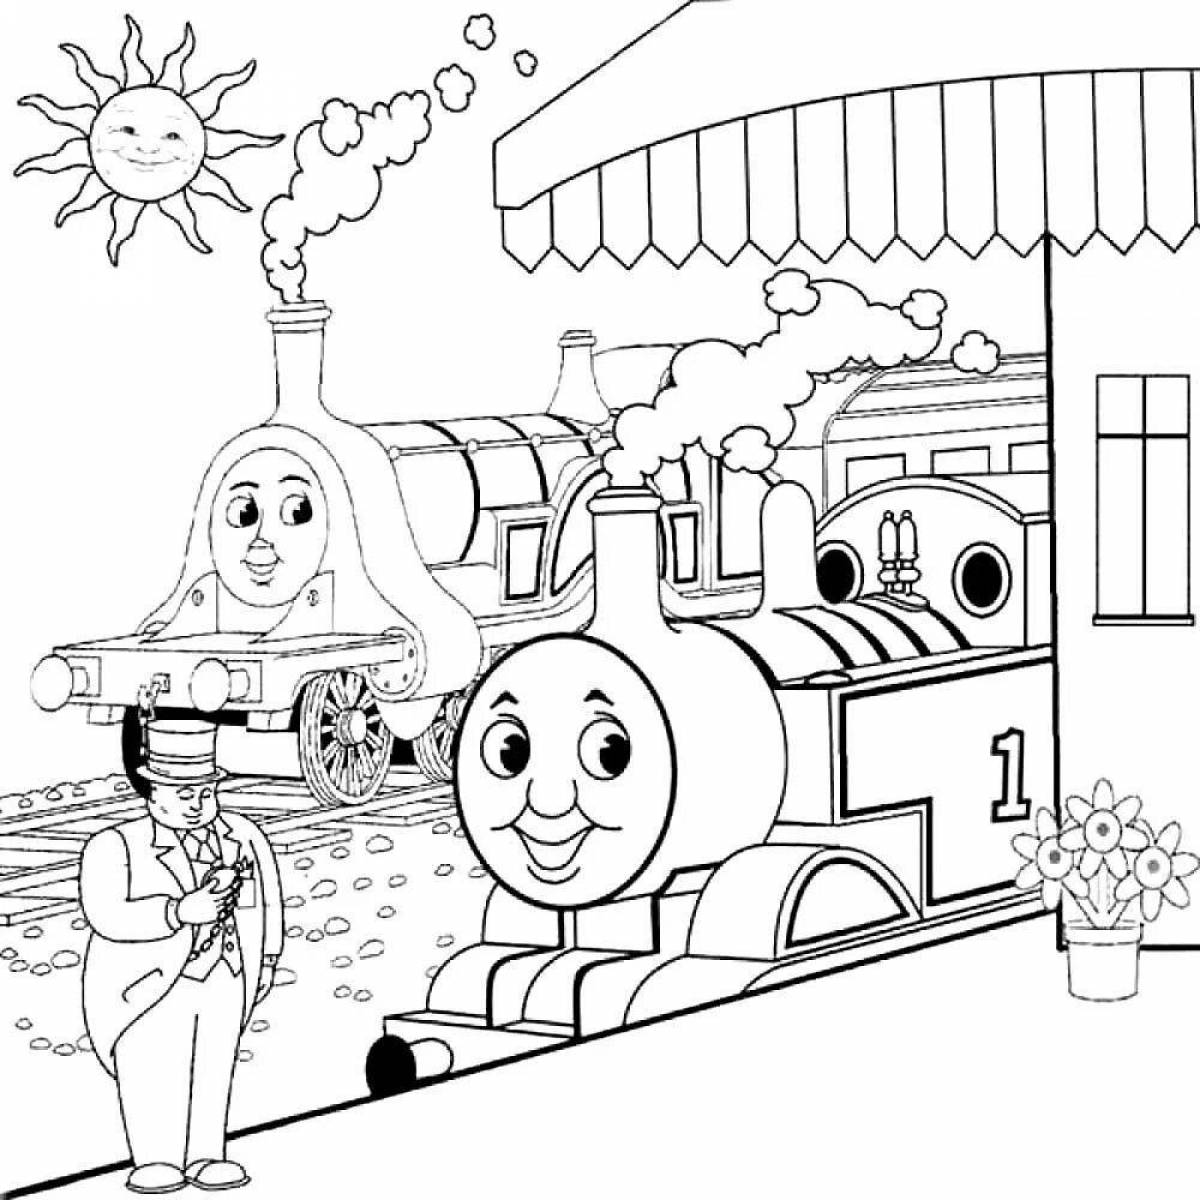 Coloring book playful thomas locomotive